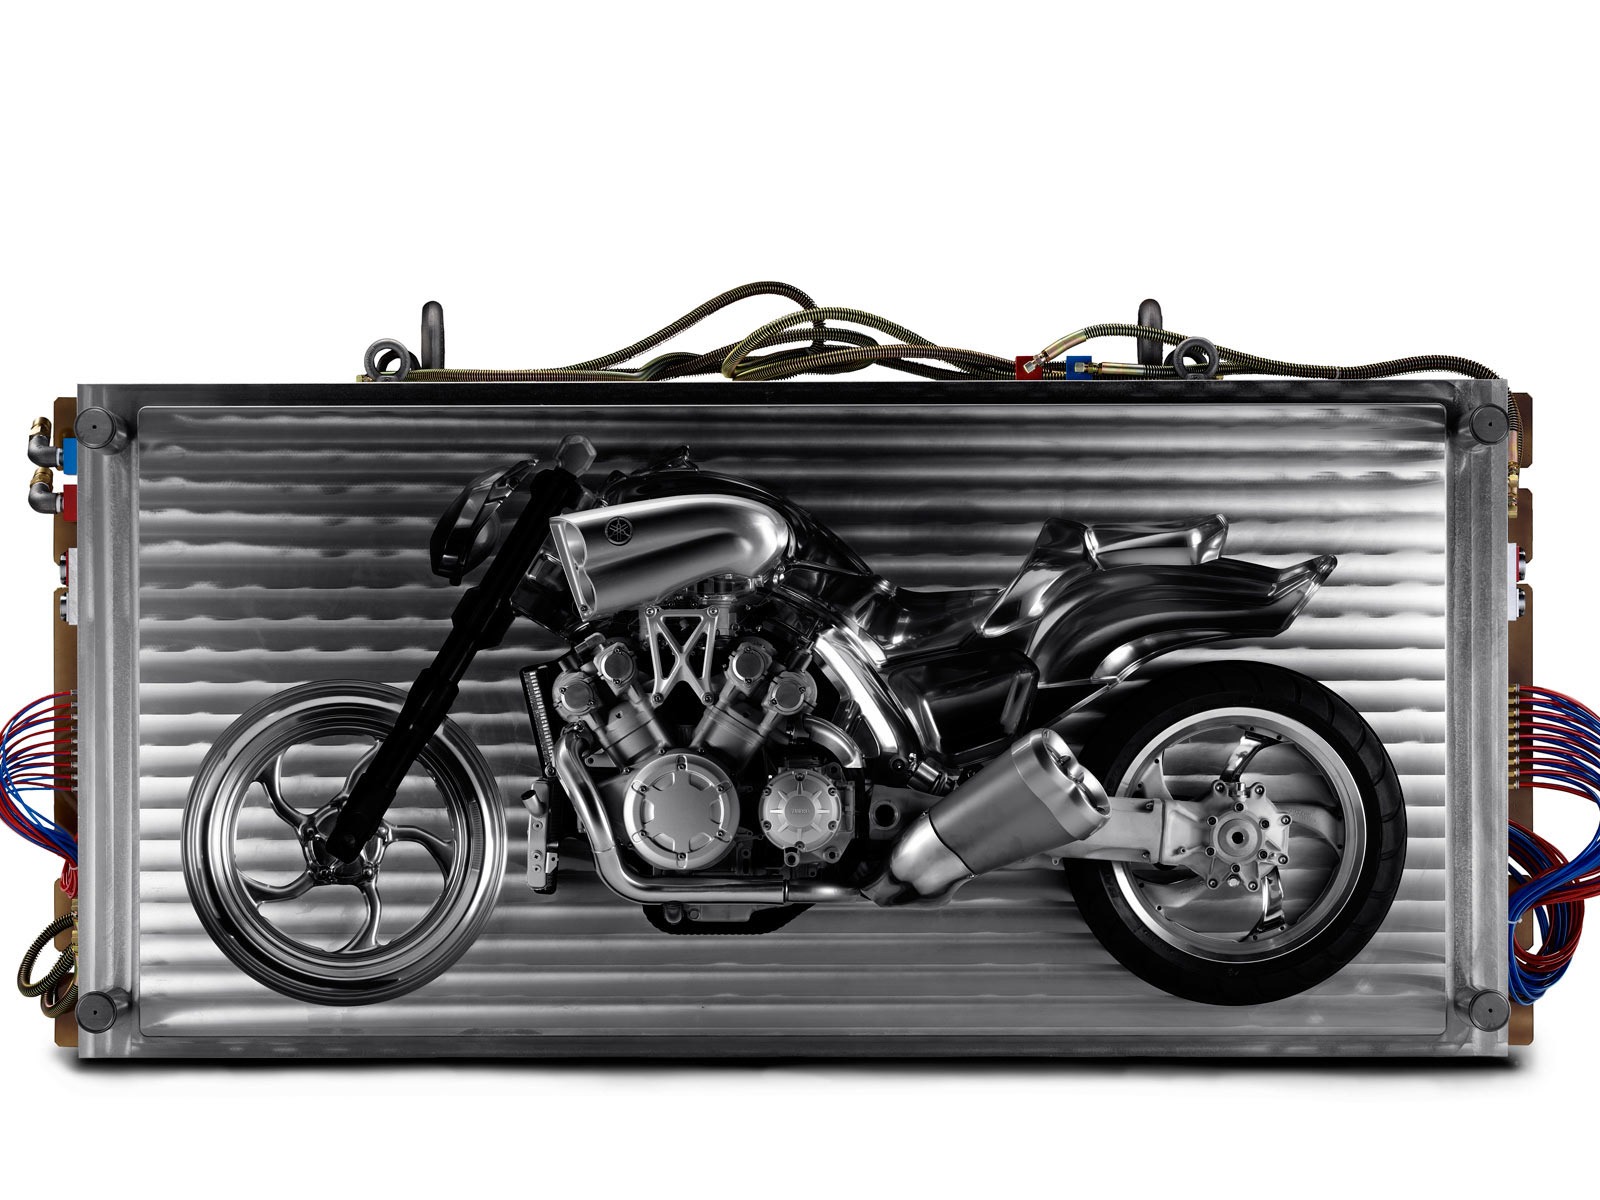 概念摩托车 壁纸(三)17 - 1600x1200